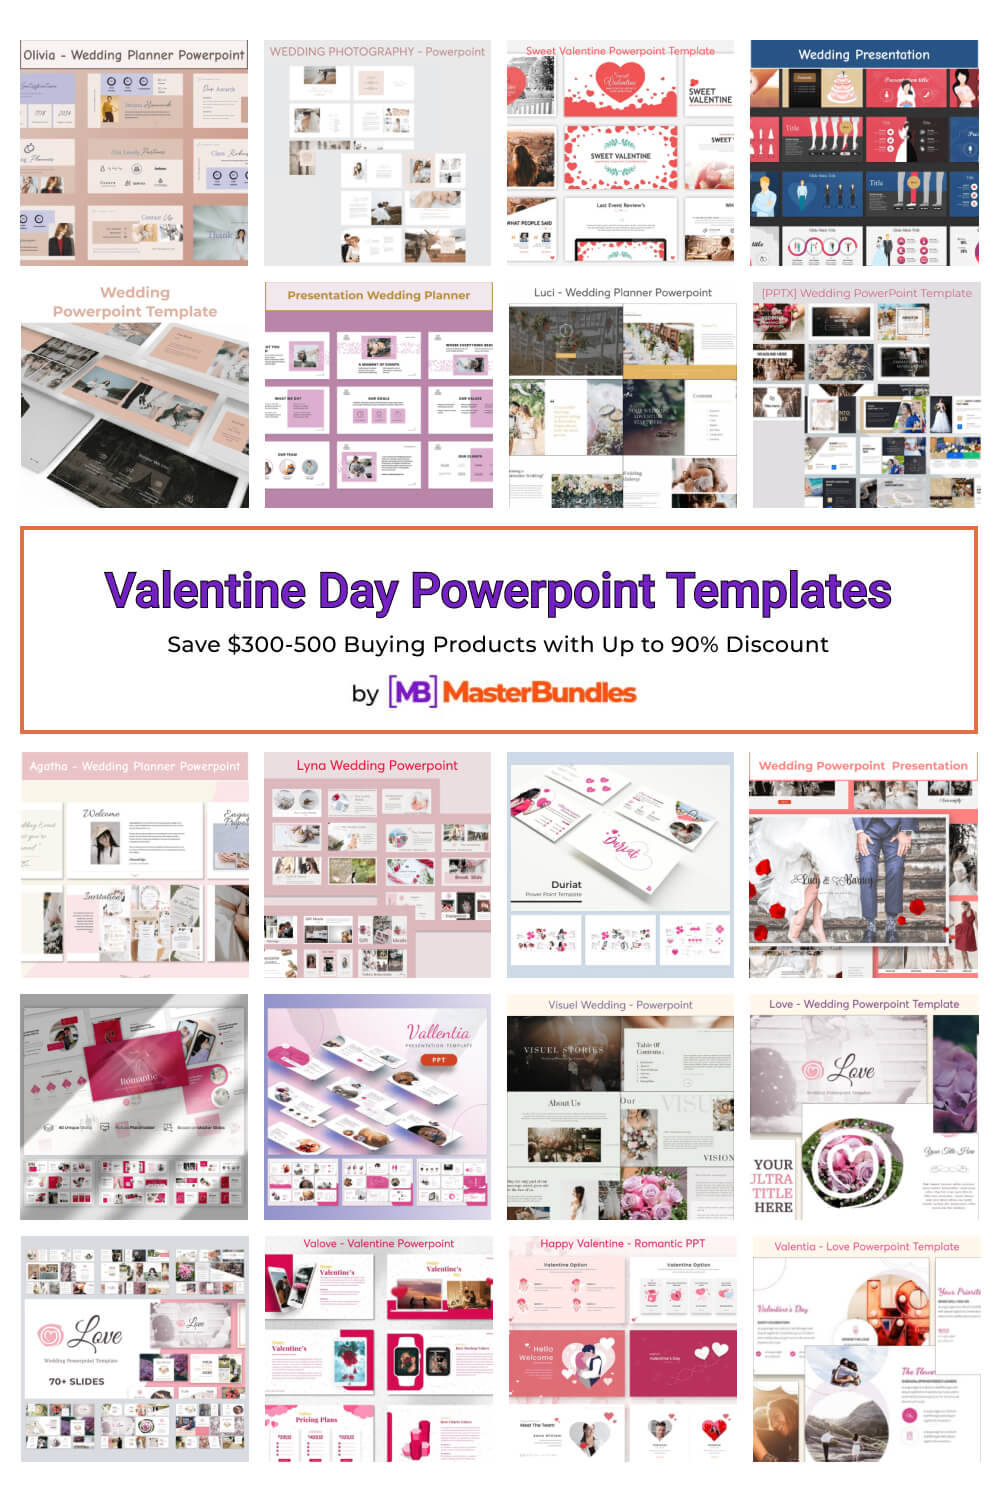 valentine day powerpoint templates pinterest image.